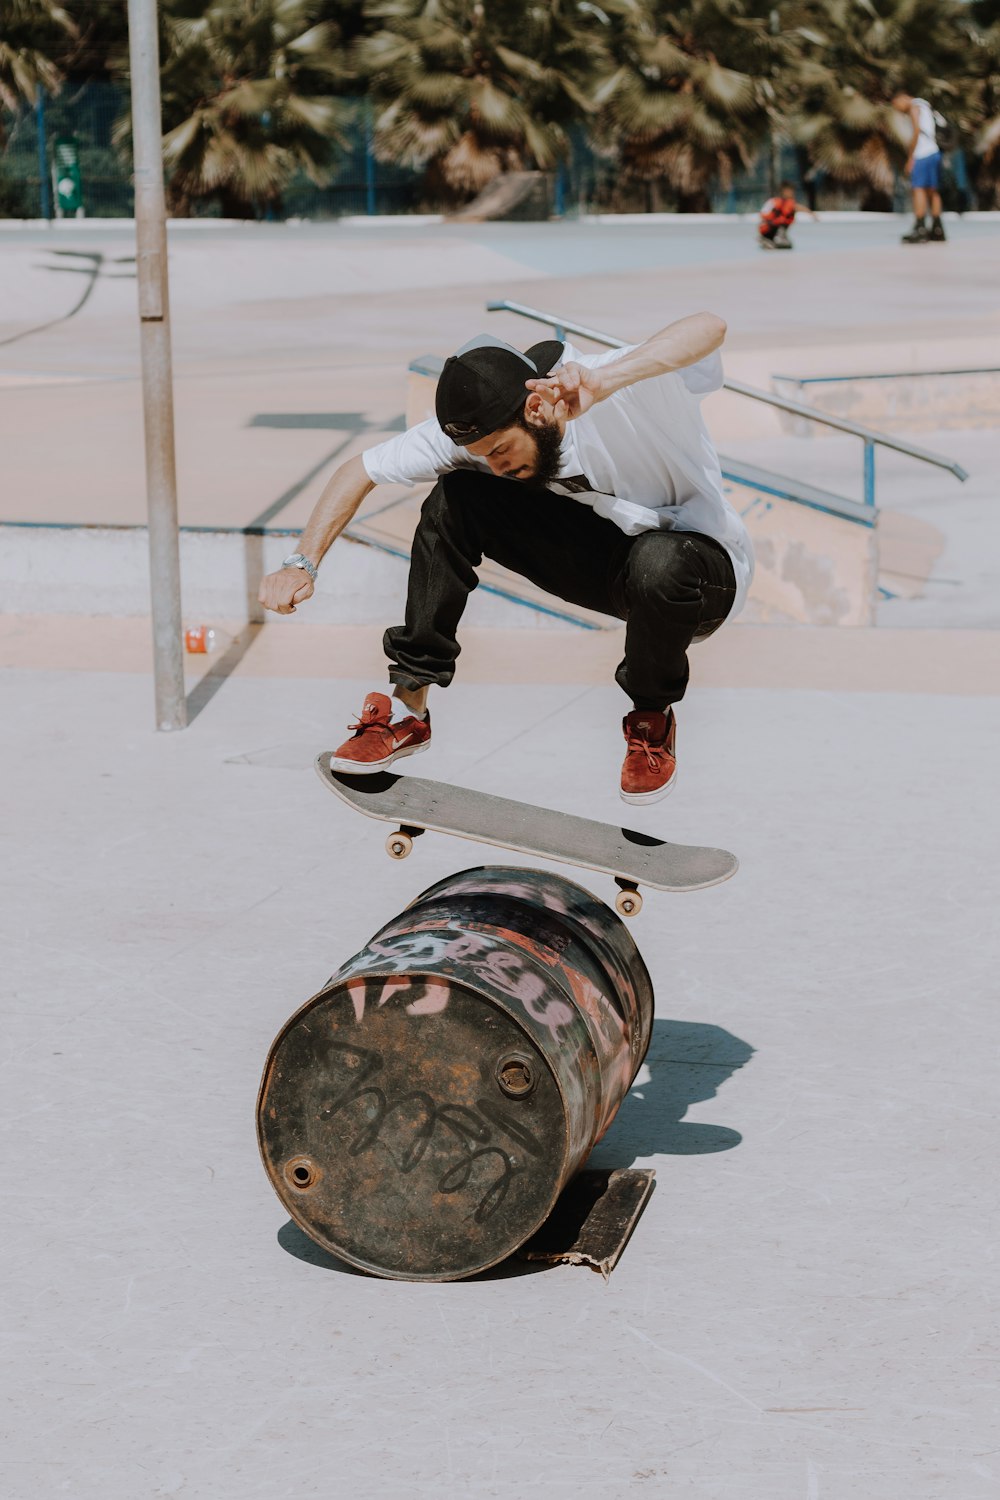 man jumping on black metal barrel with skateboard during daytime